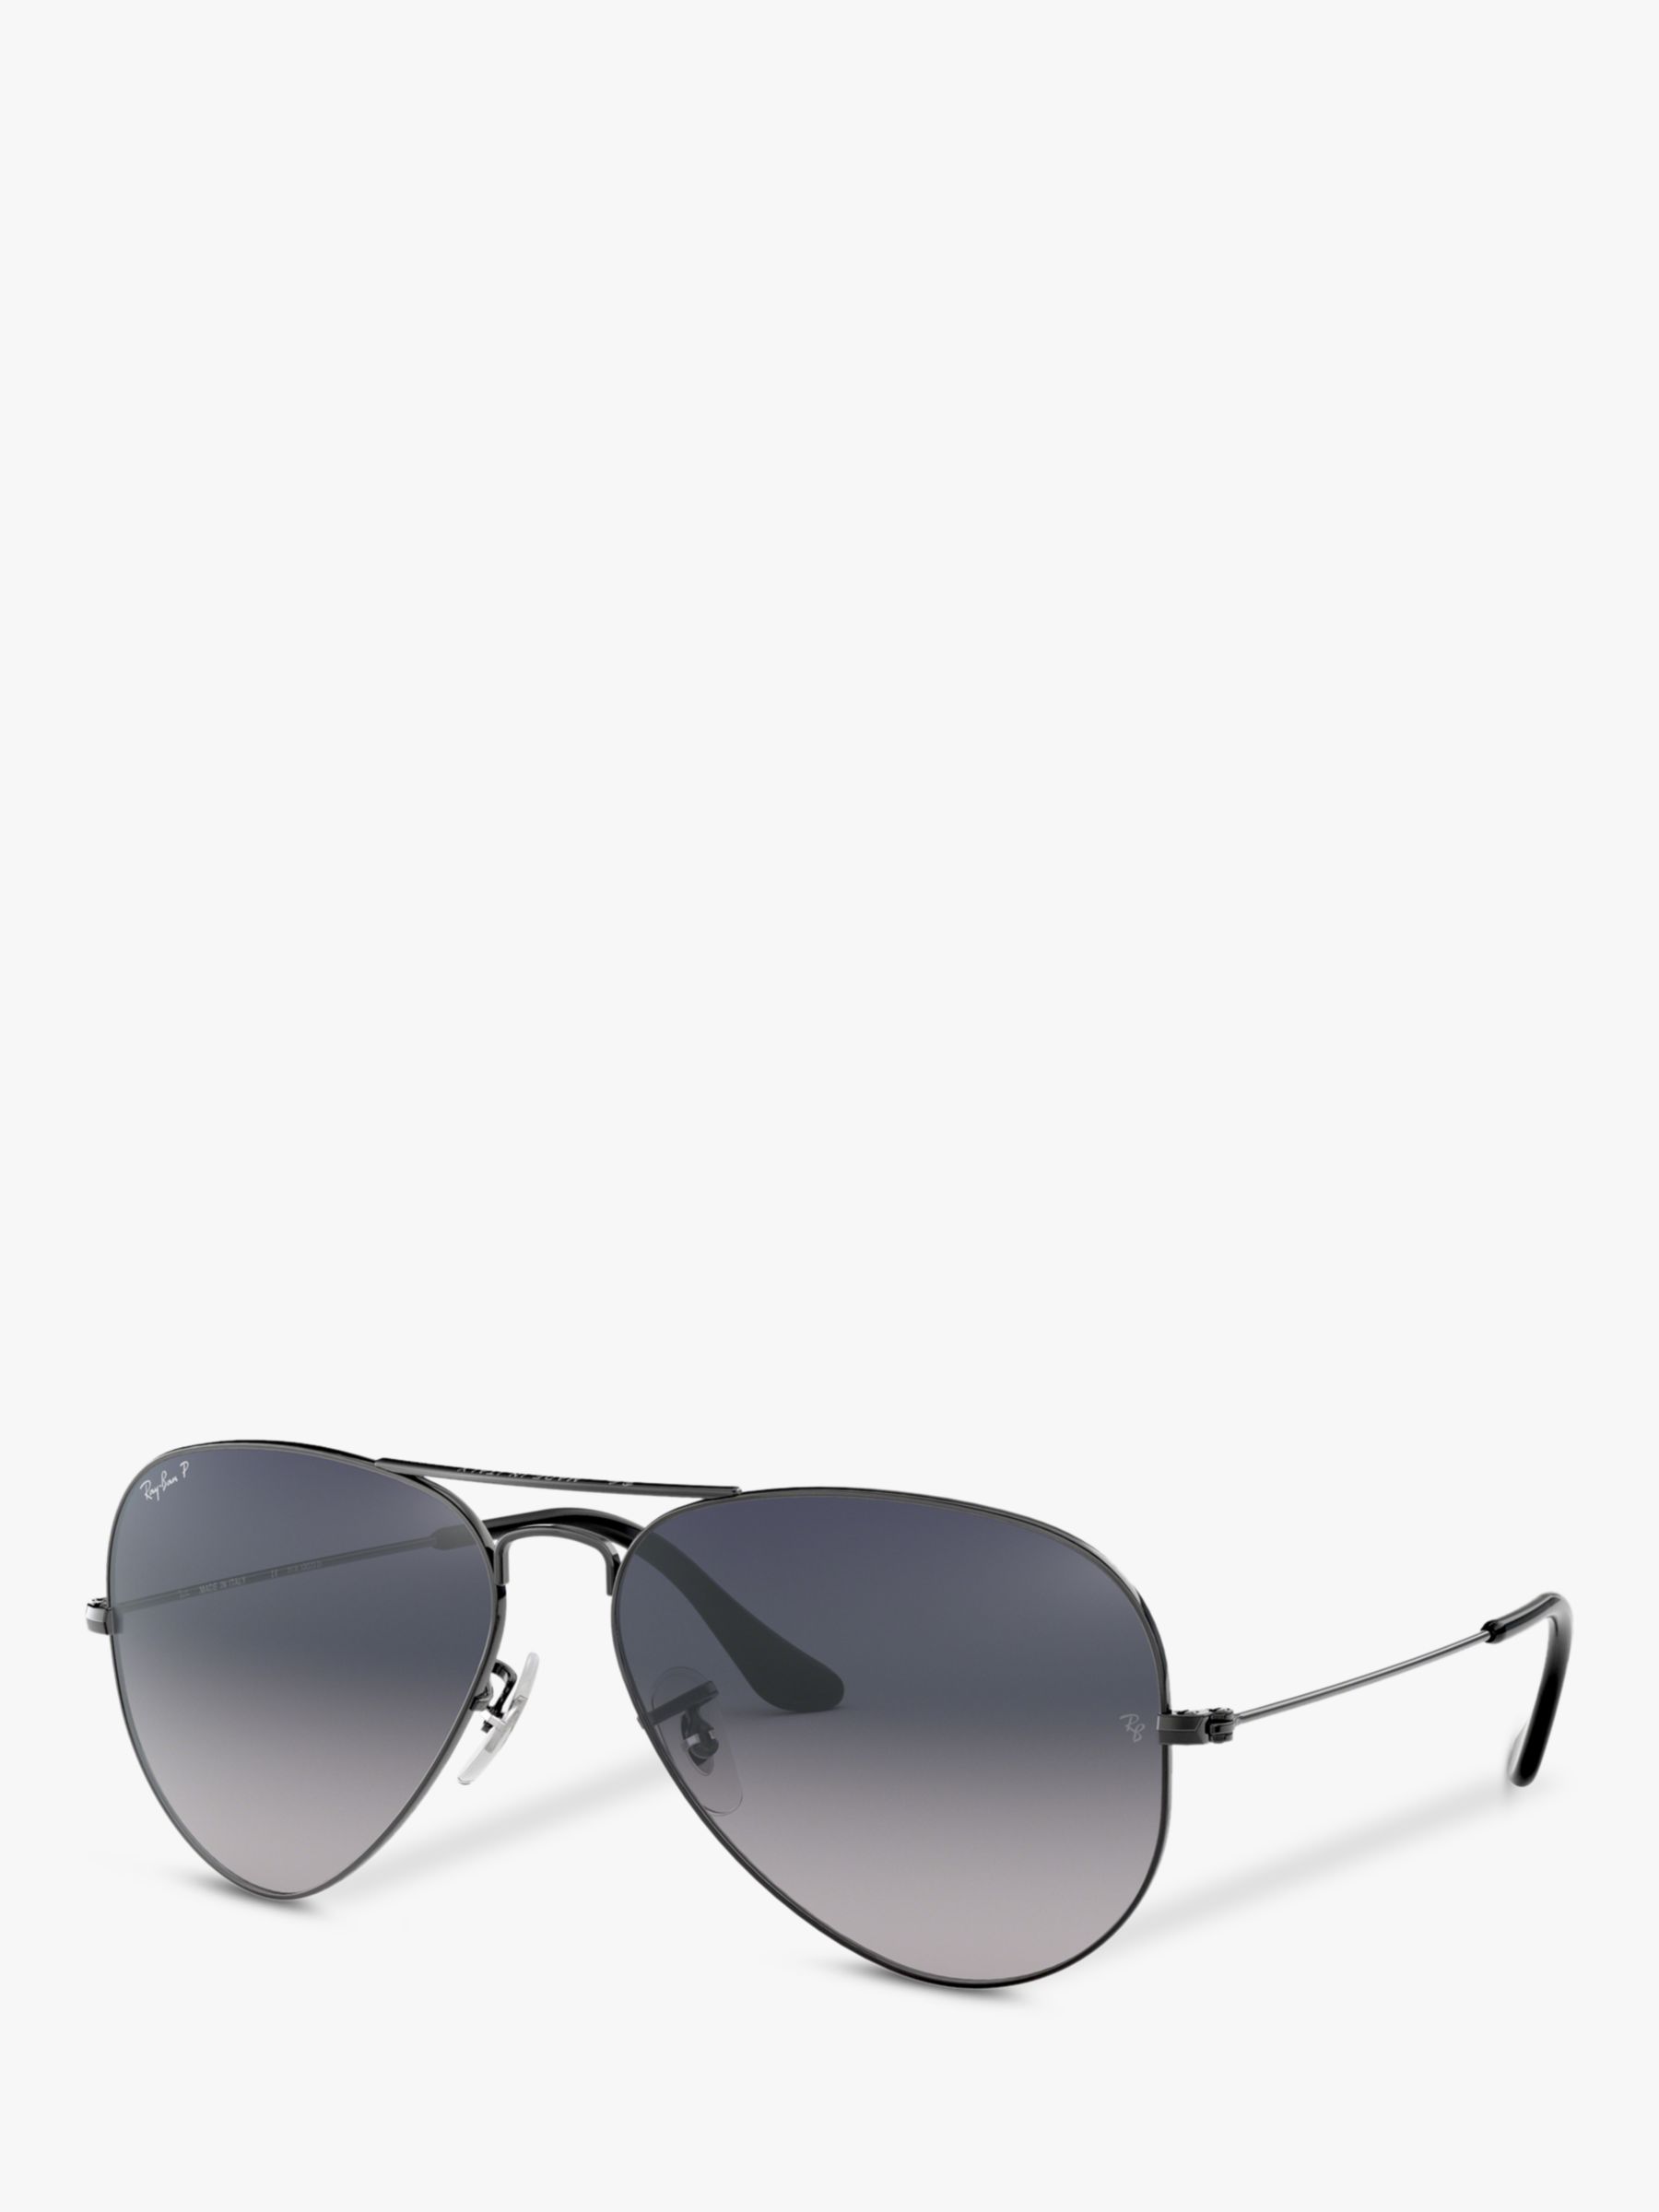 Ray Ban Rb3025 004 78 Aviator Sunglasses Gunmetal At John Lewis Partners